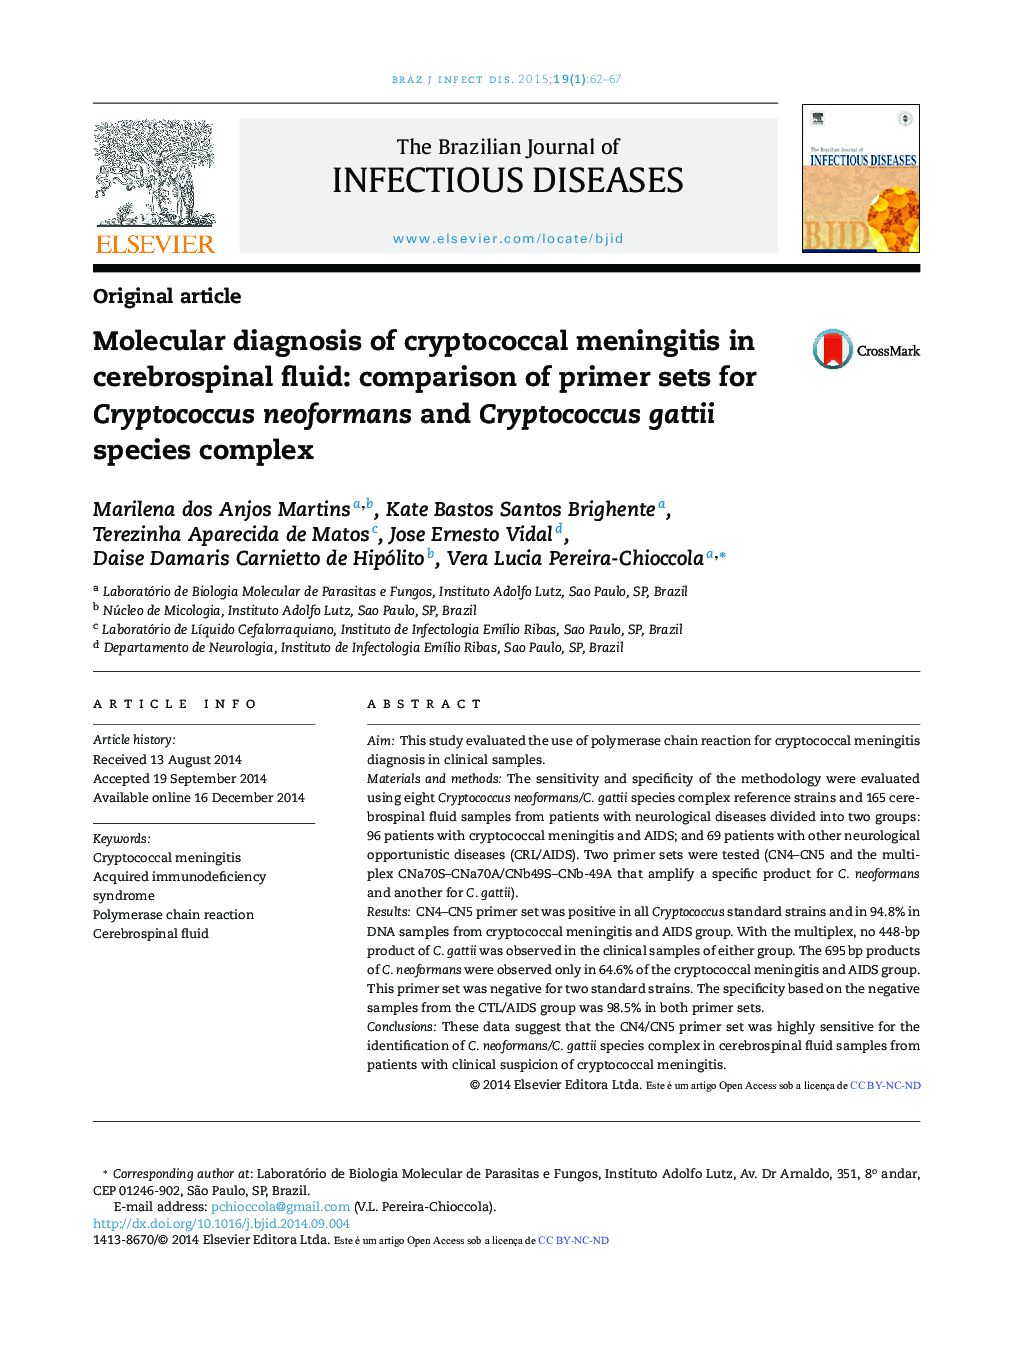 Molecular diagnosis of cryptococcal meningitis in cerebrospinal fluid: comparison of primer sets for Cryptococcus neoformans and Cryptococcus gattii species complex